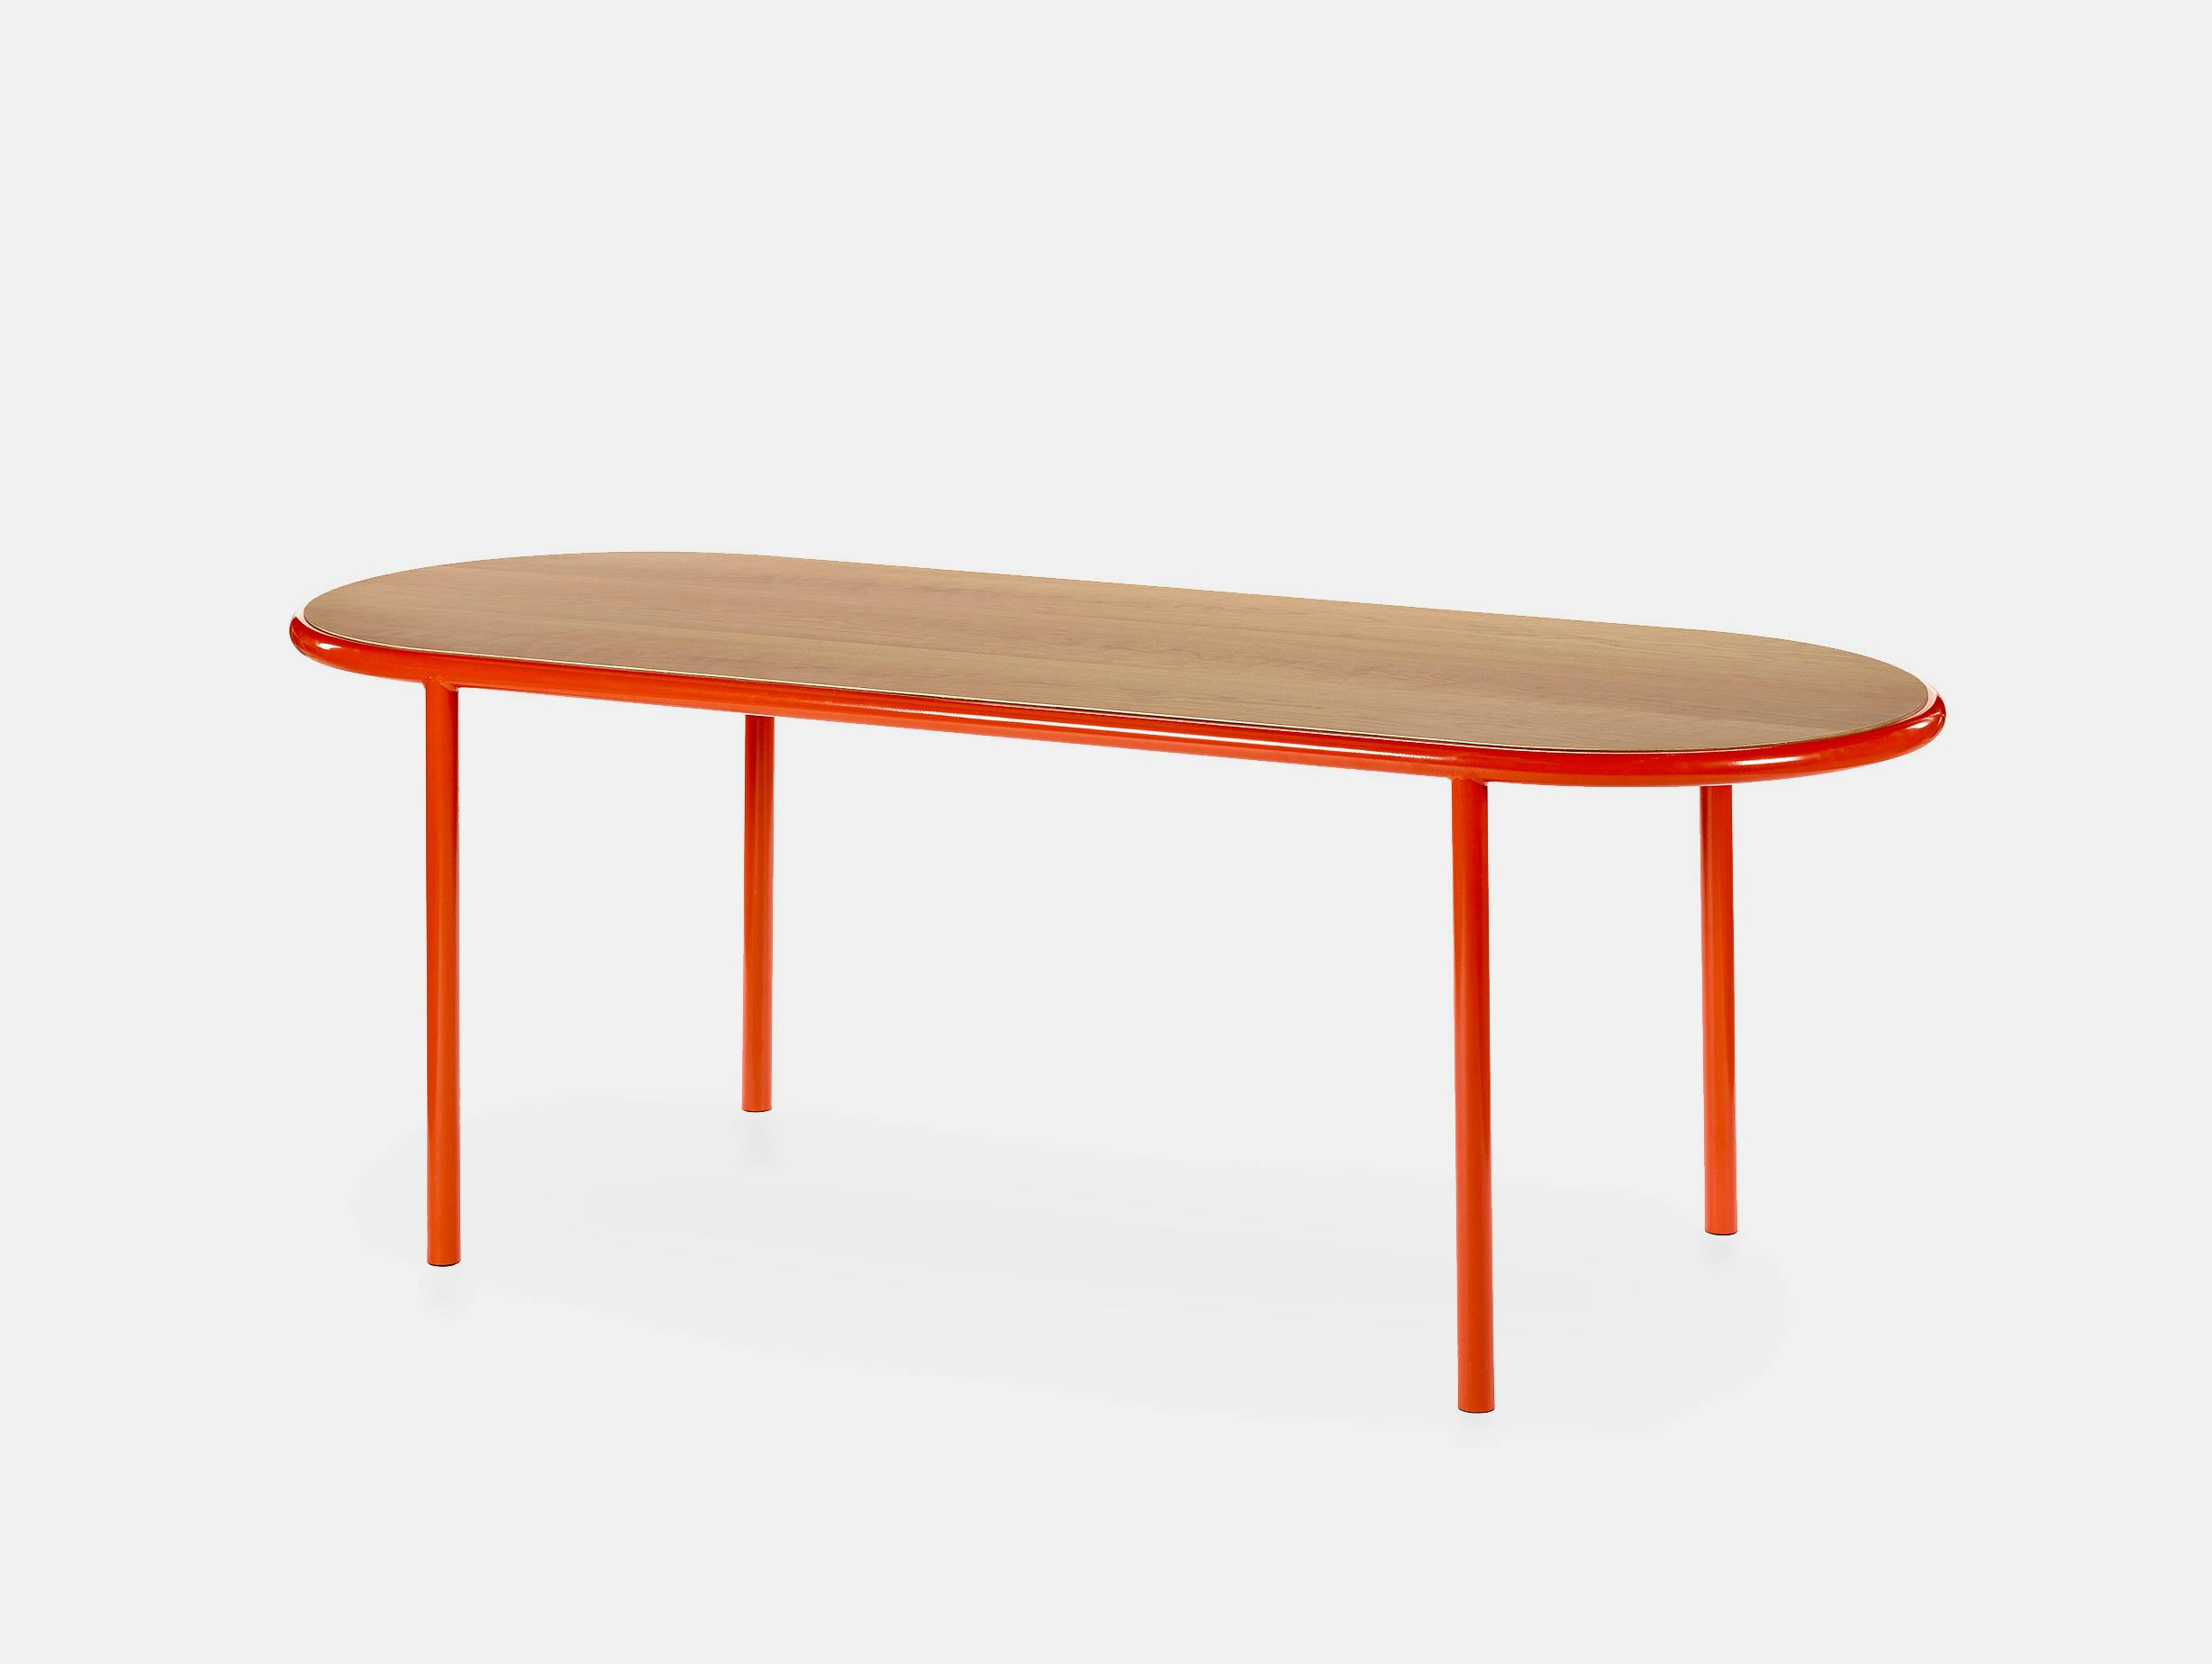 Muller van severen wooden table oval red cherry